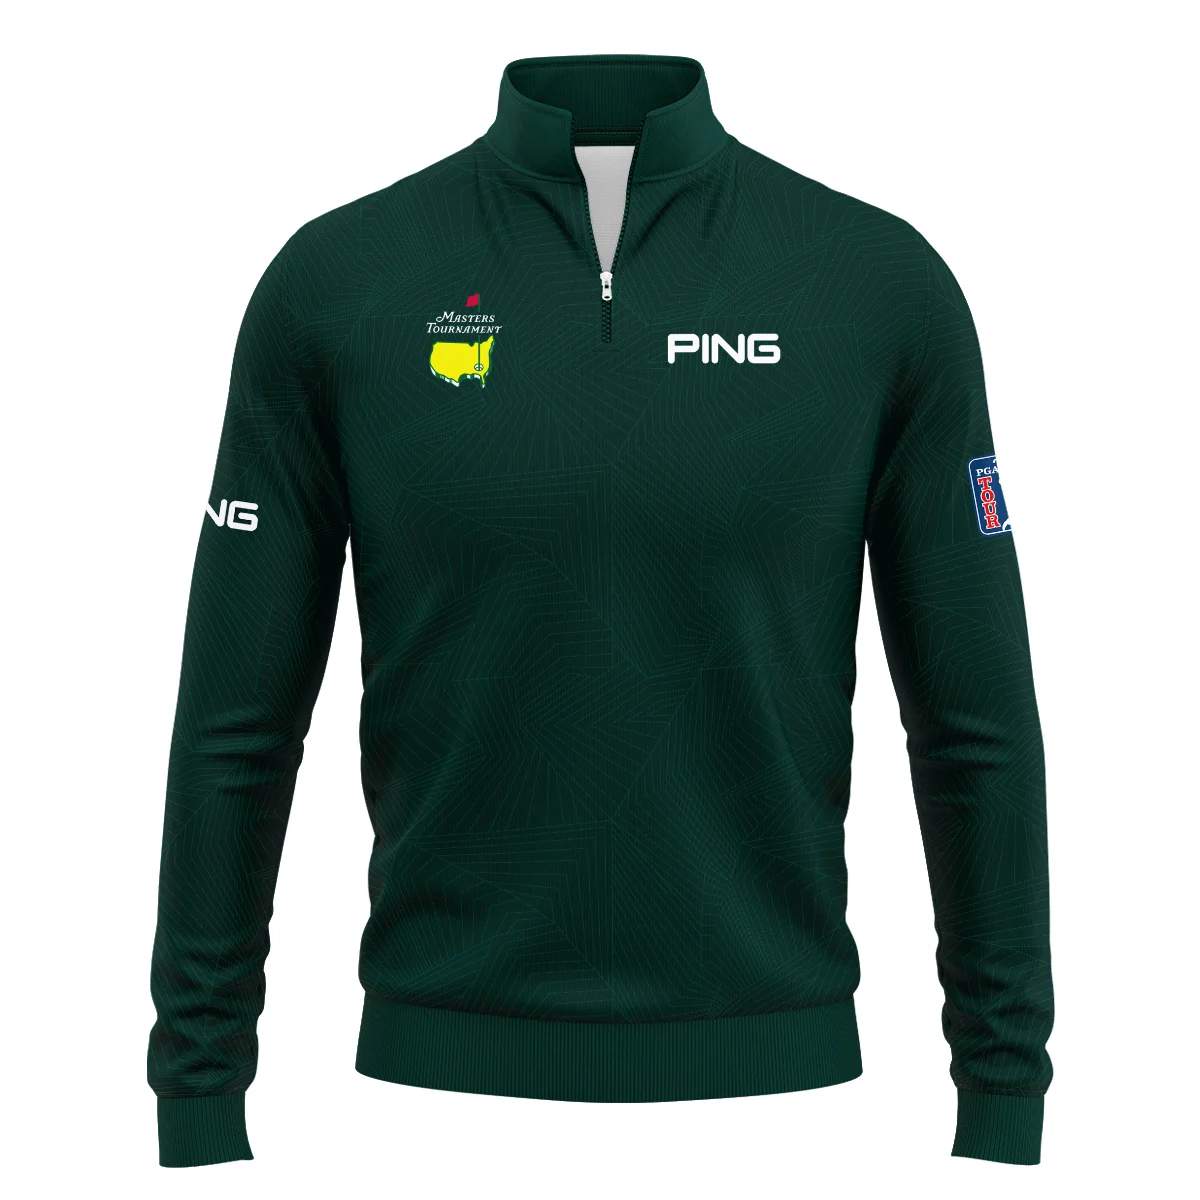 Masters Tournament Ping Pattern Sport Jersey Dark Green Quarter-Zip Jacket Style Classic Quarter-Zip Jacket